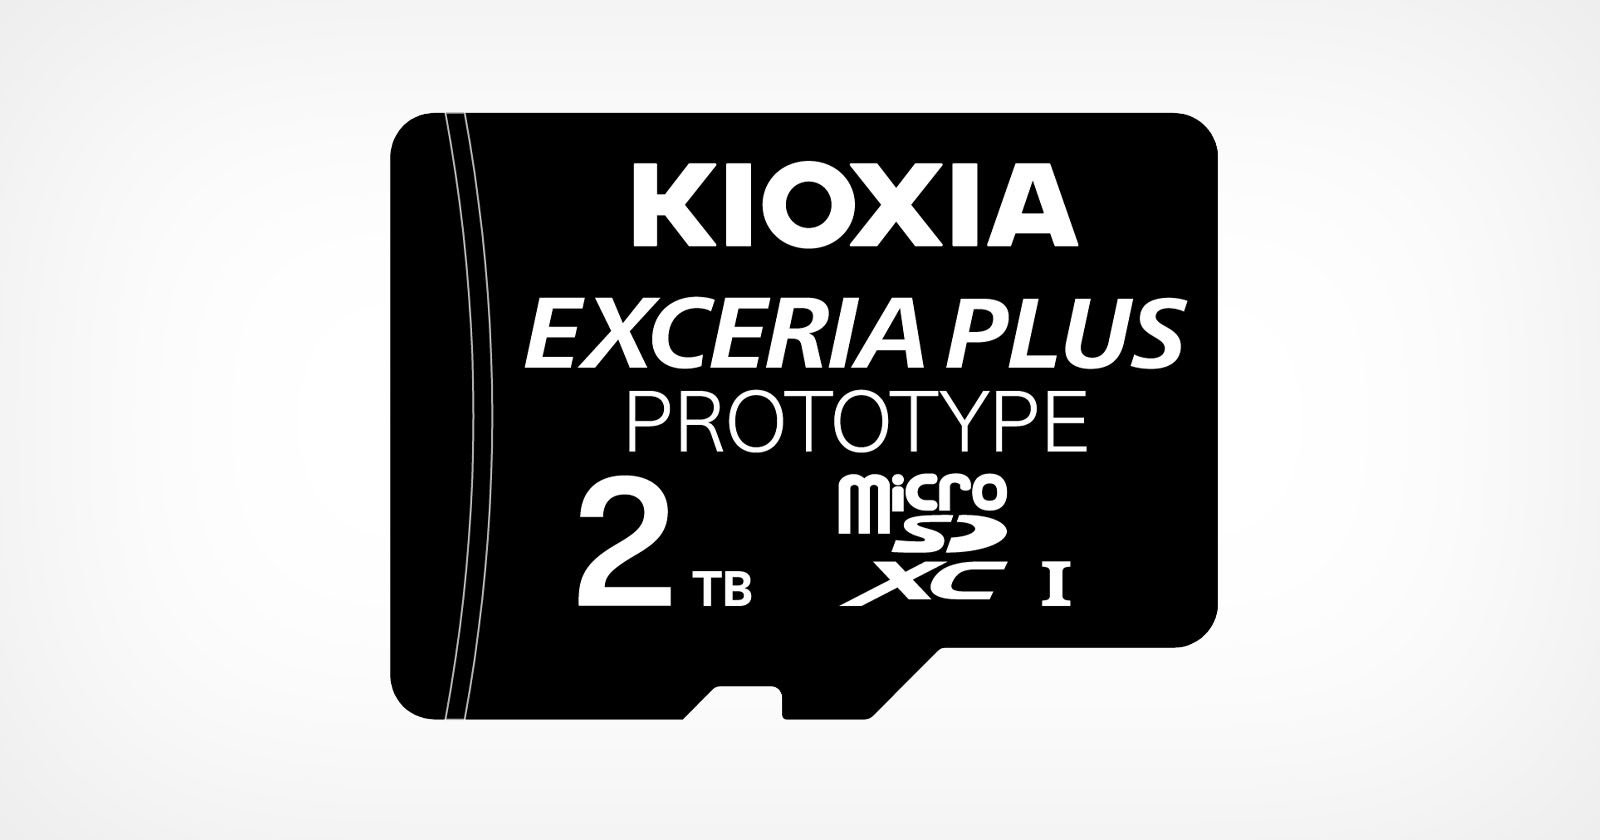  kioxia has working prototypes world first 2tb 